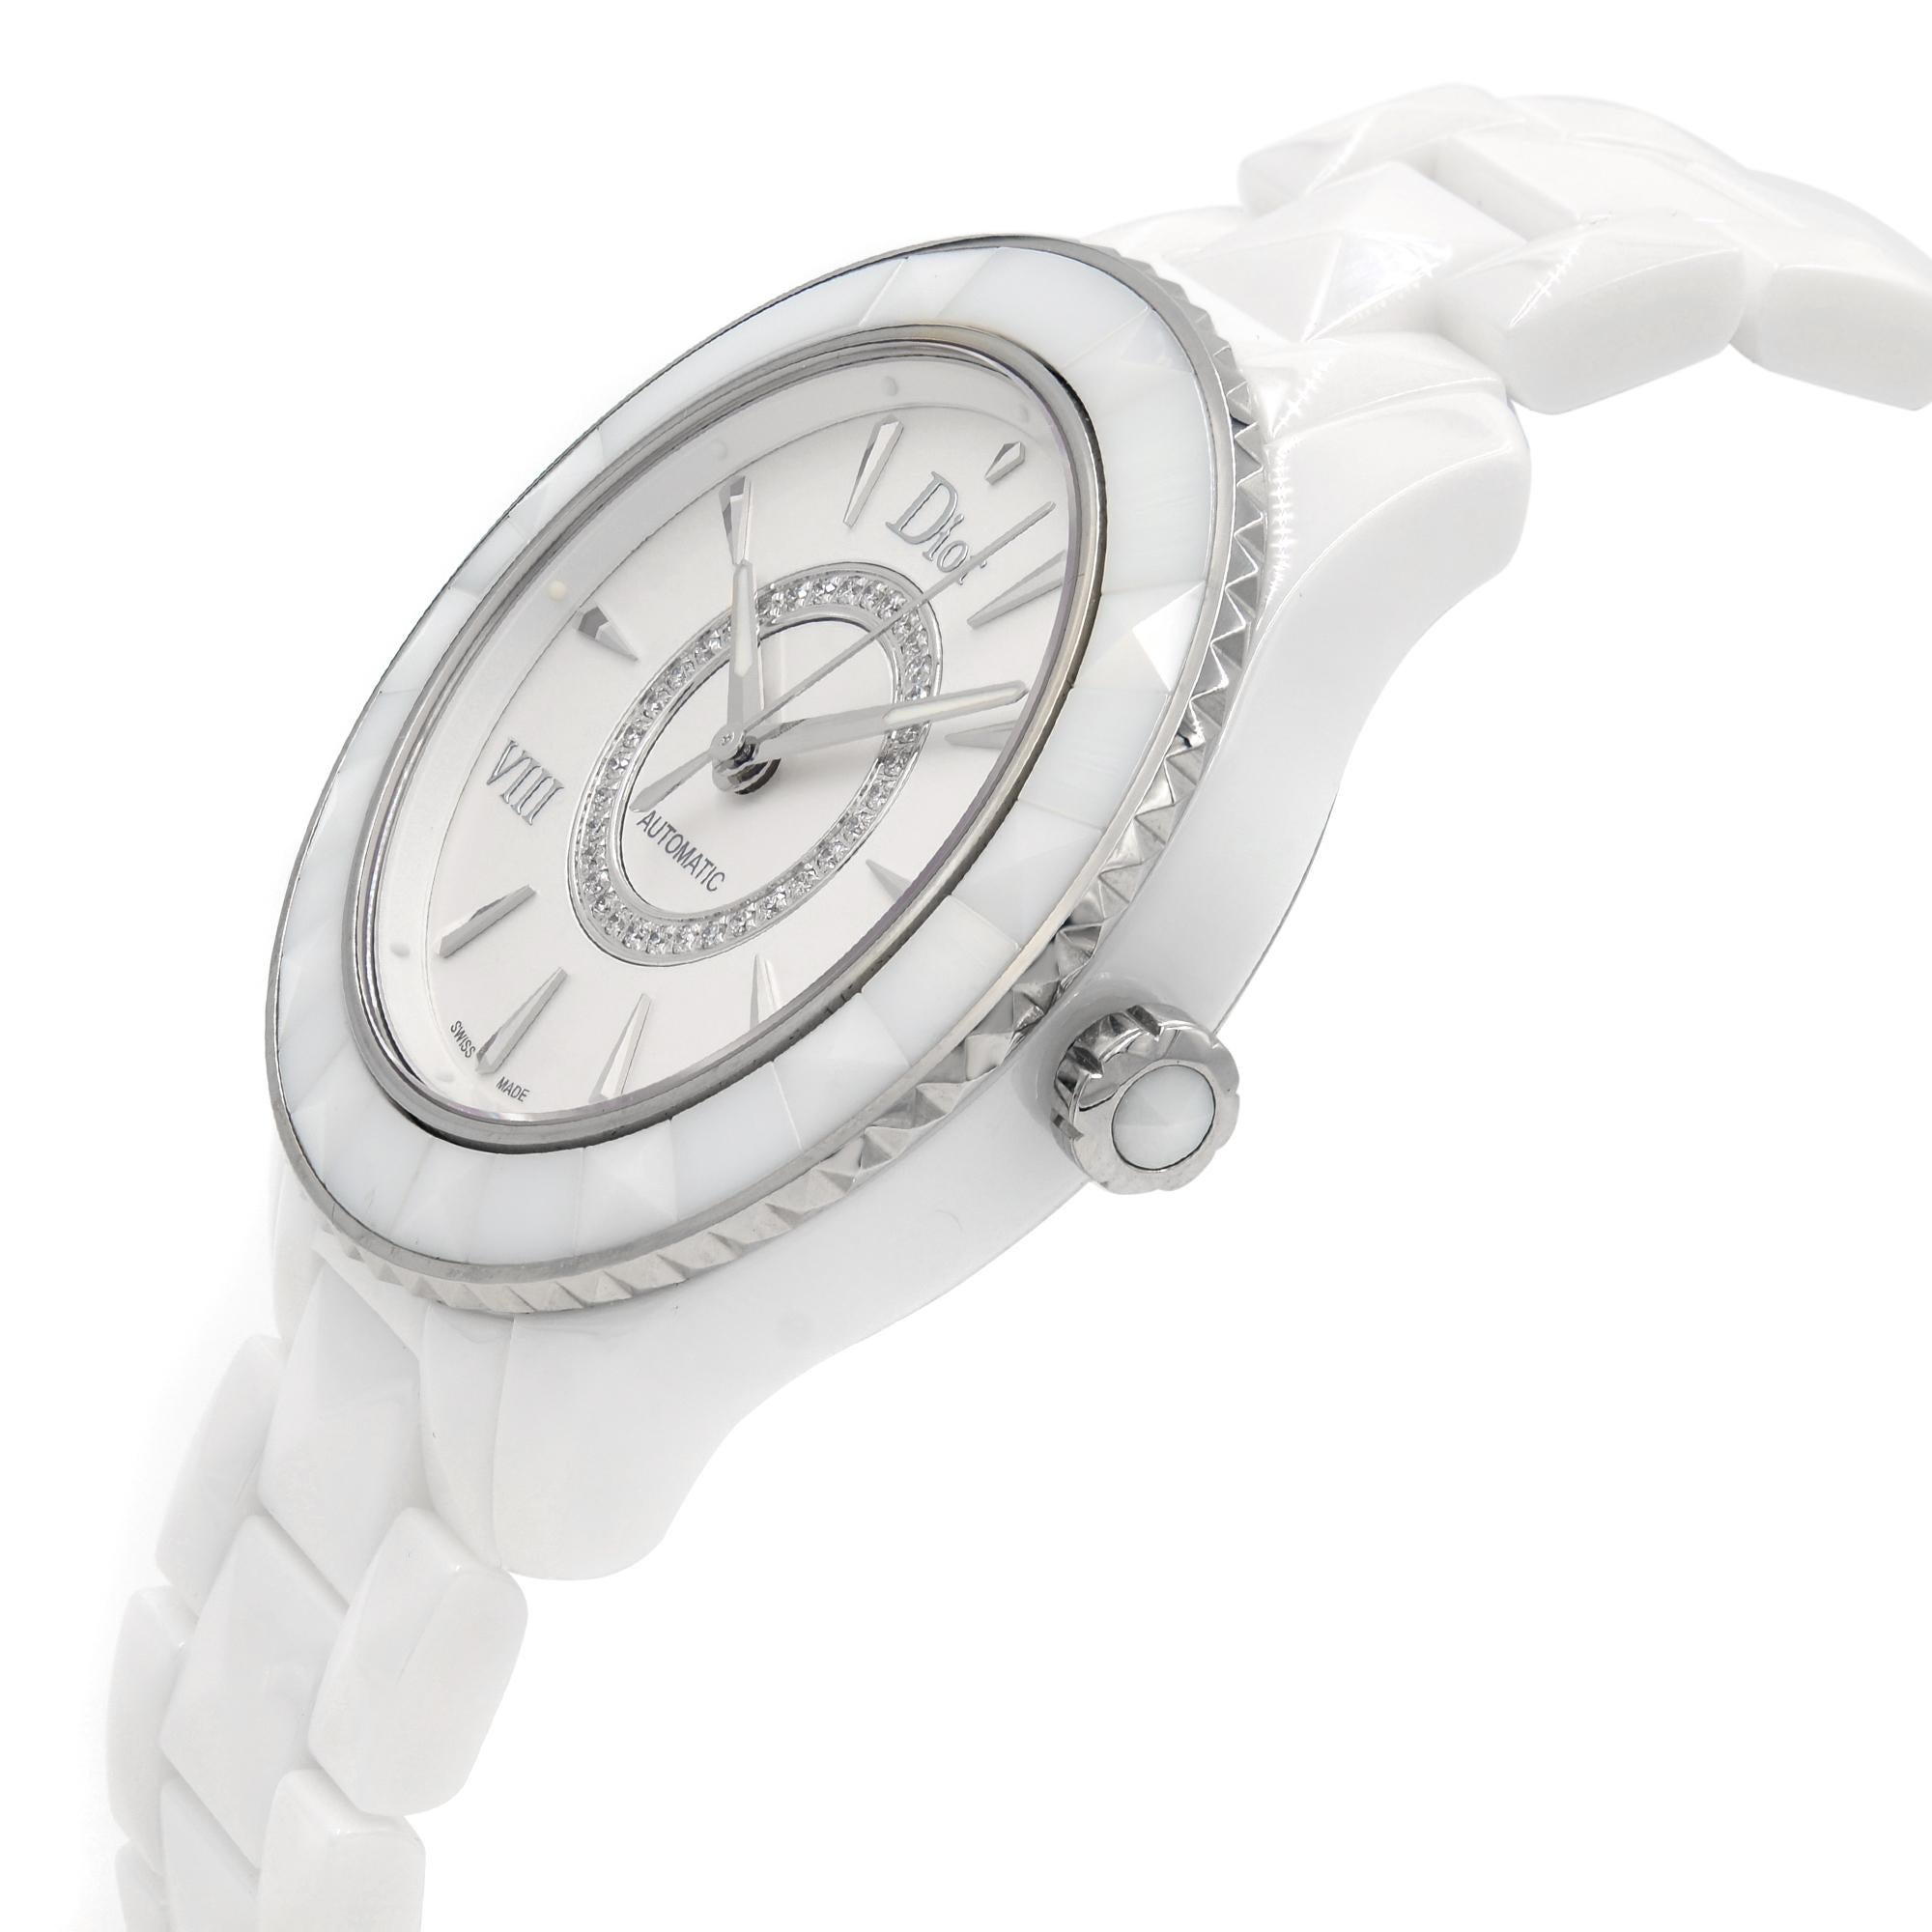 diamond dior watch sapphire coated price